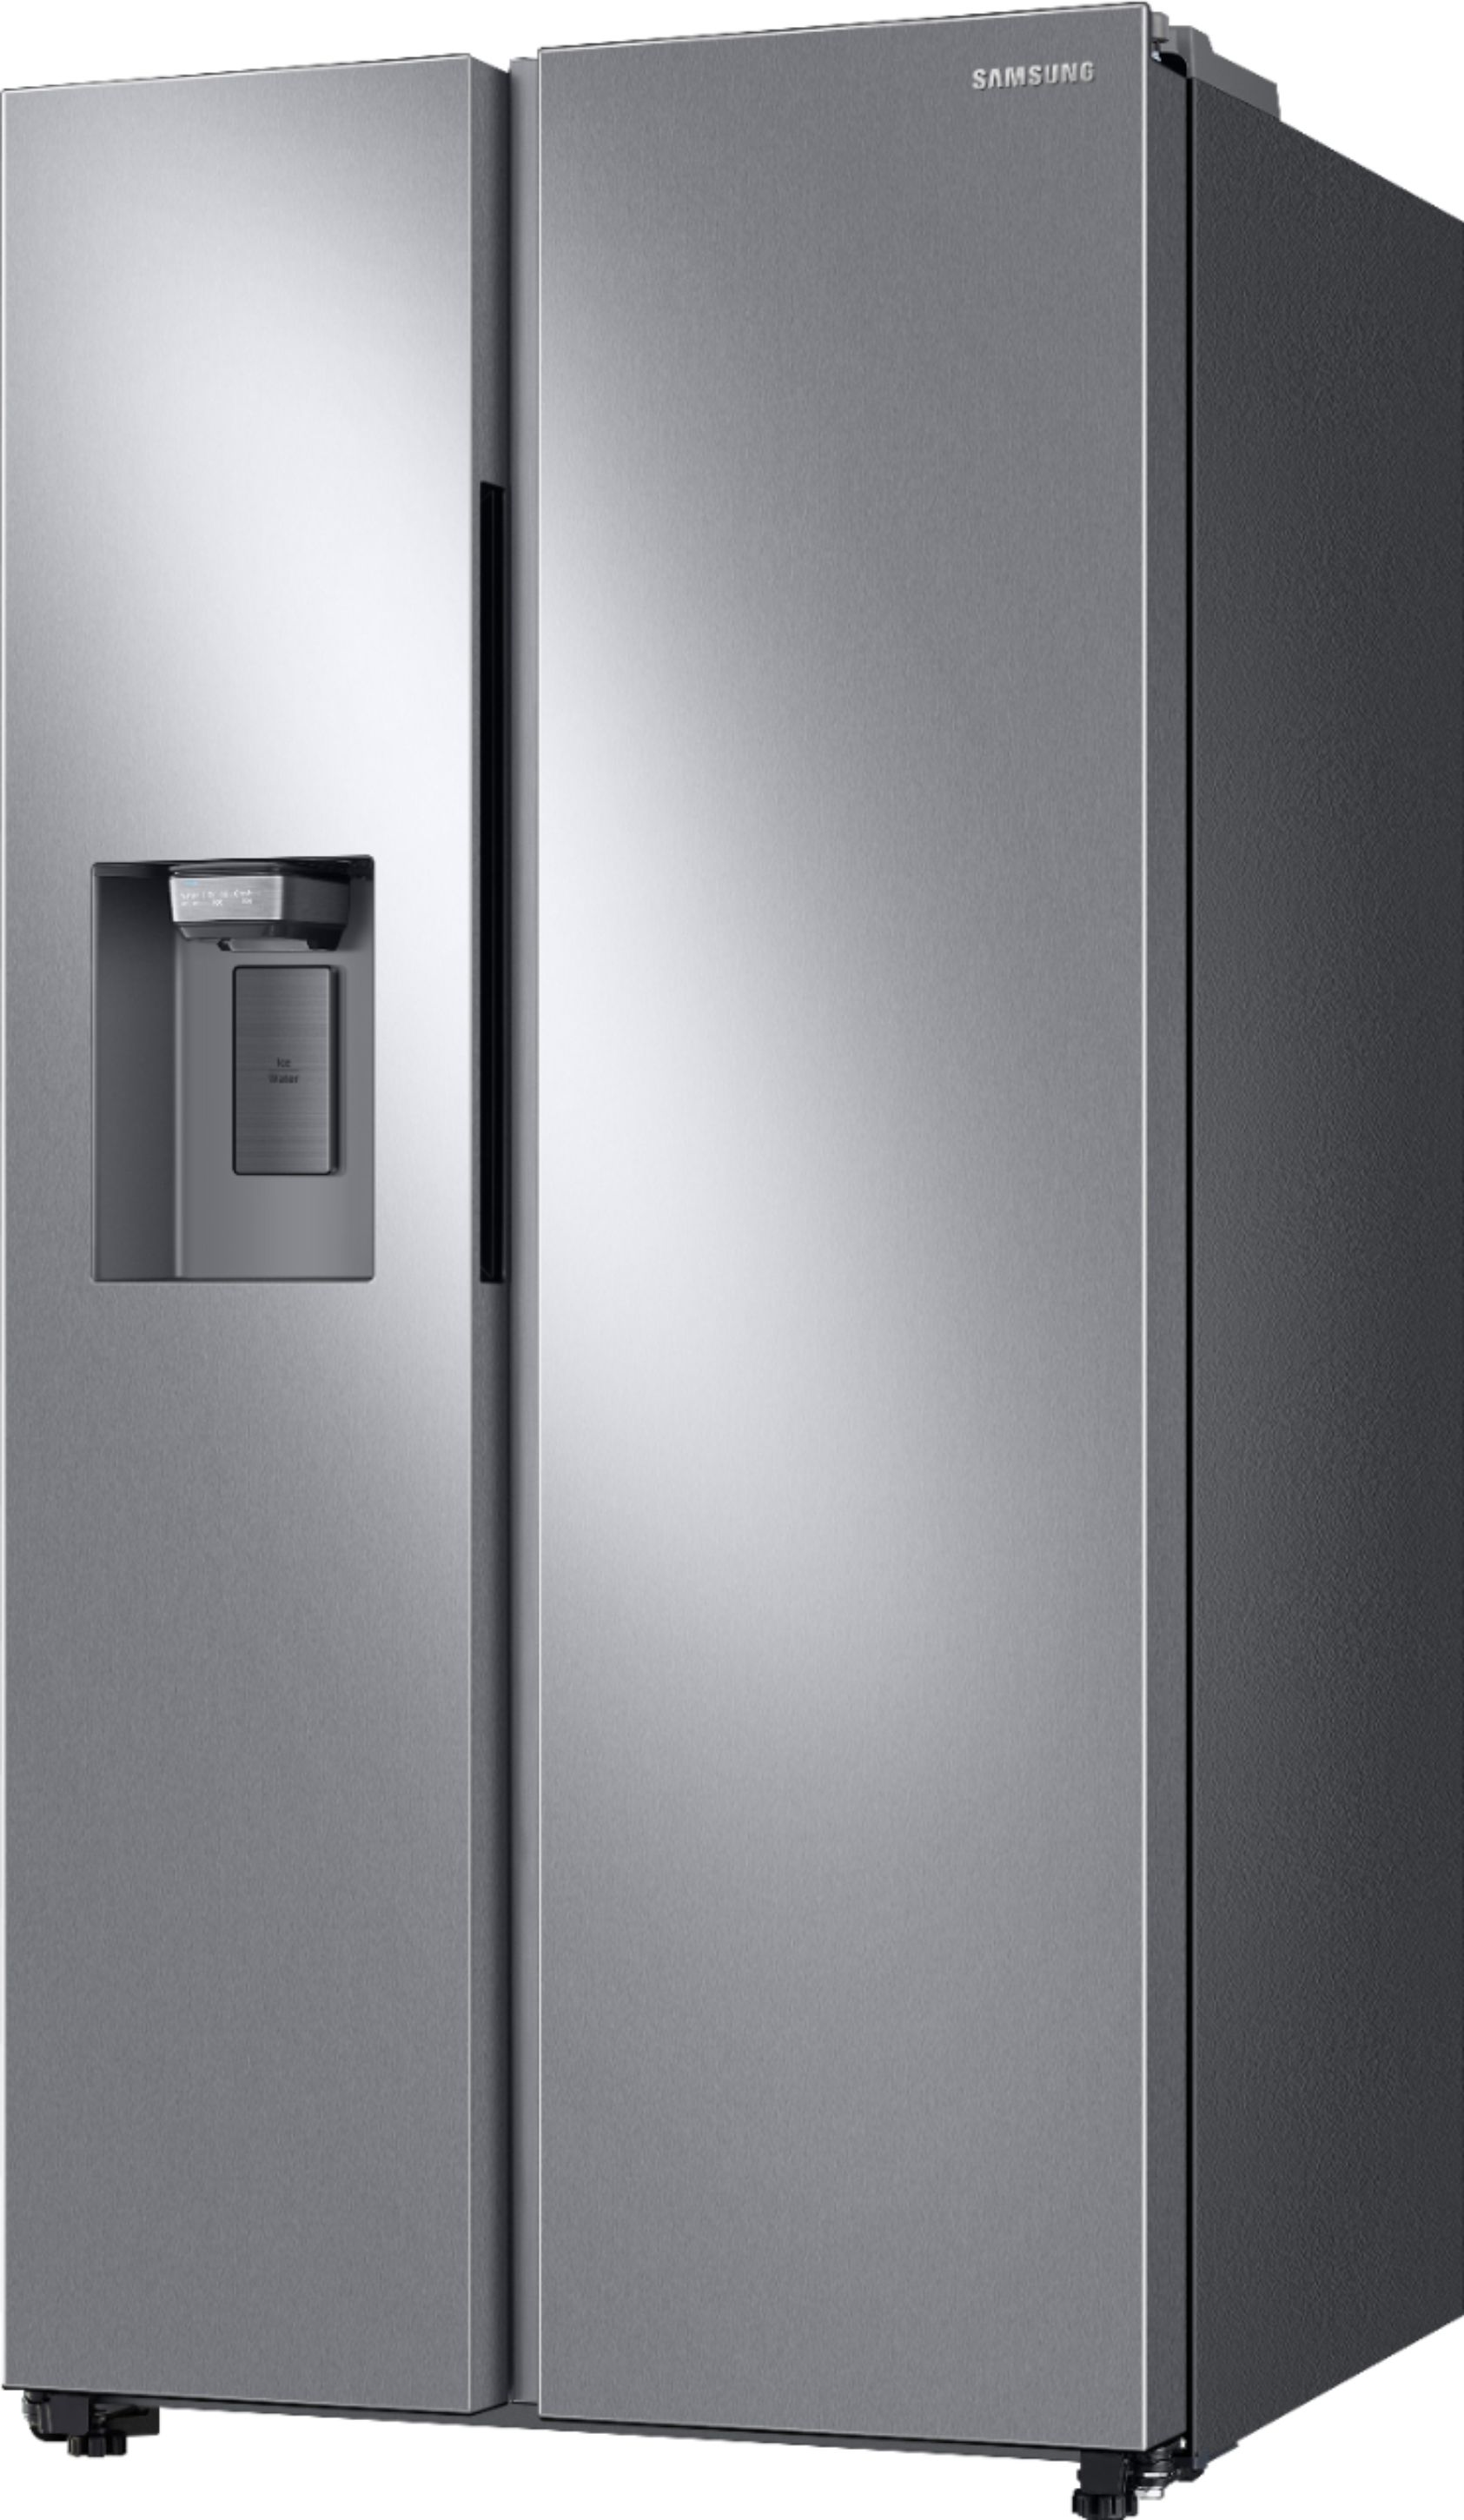 Left View: Samsung - Bespoke 12.0 cu. ft. Bottom Freezer refrigerator - Grey glass